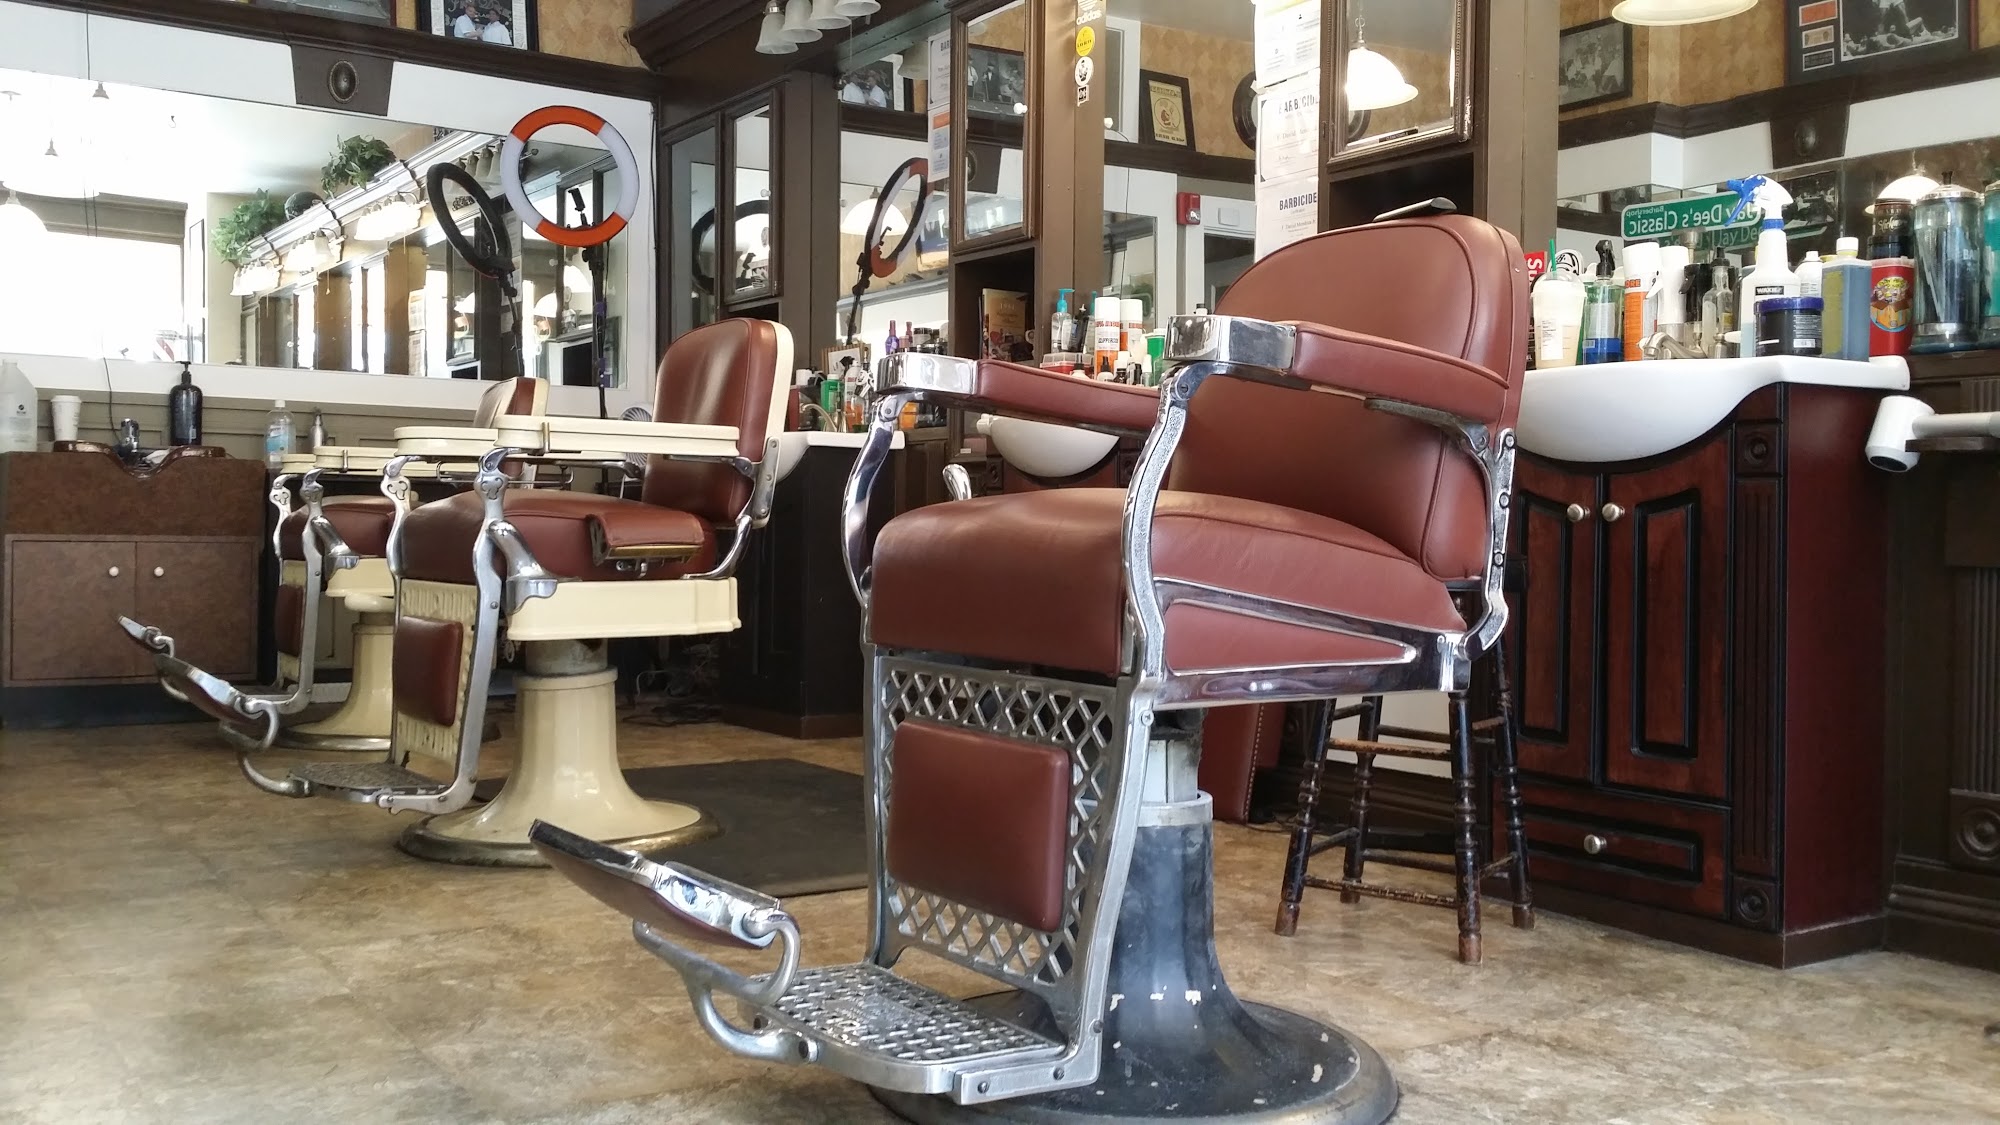 Jay Dee's Classic Barber Shop